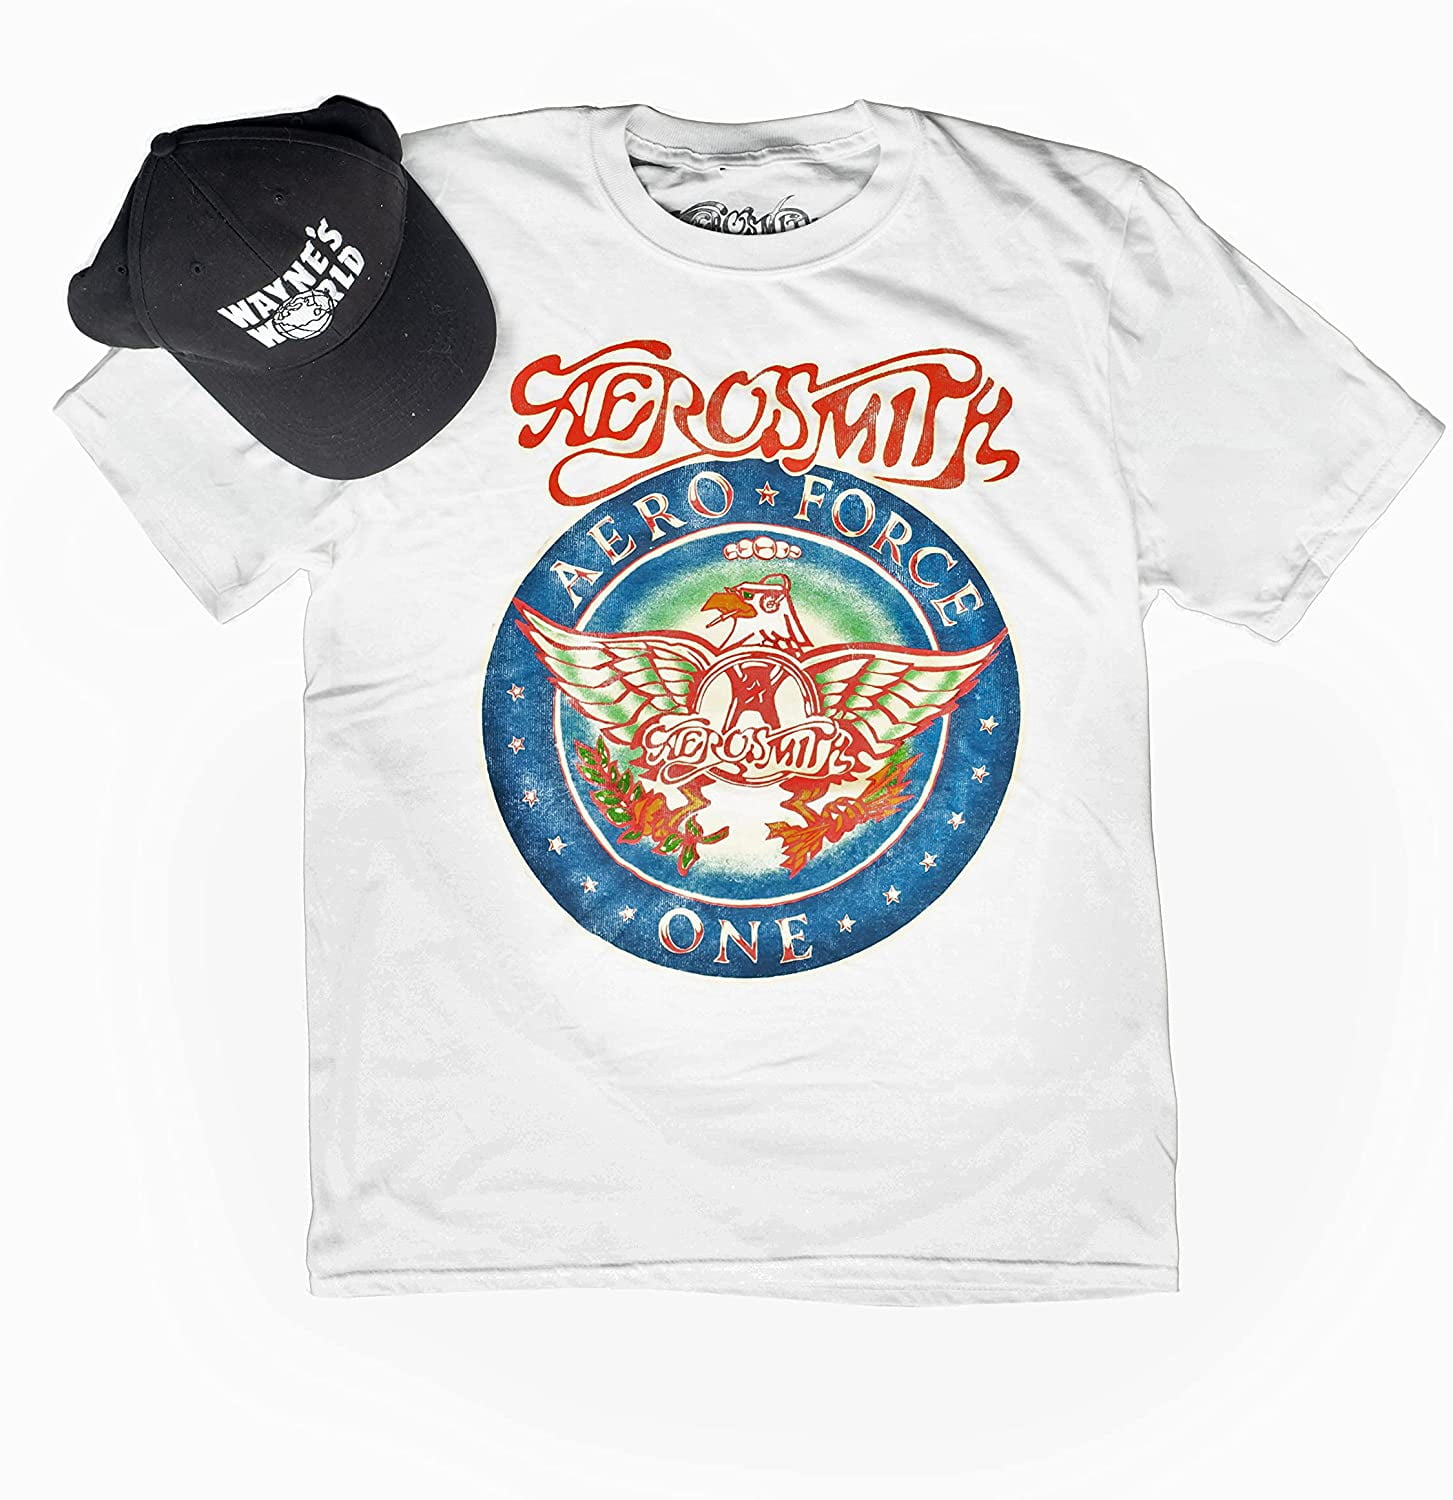 Wayne's World Garth Algar Aerosmith T-shirt Halloween Costume Unisex Shirts 